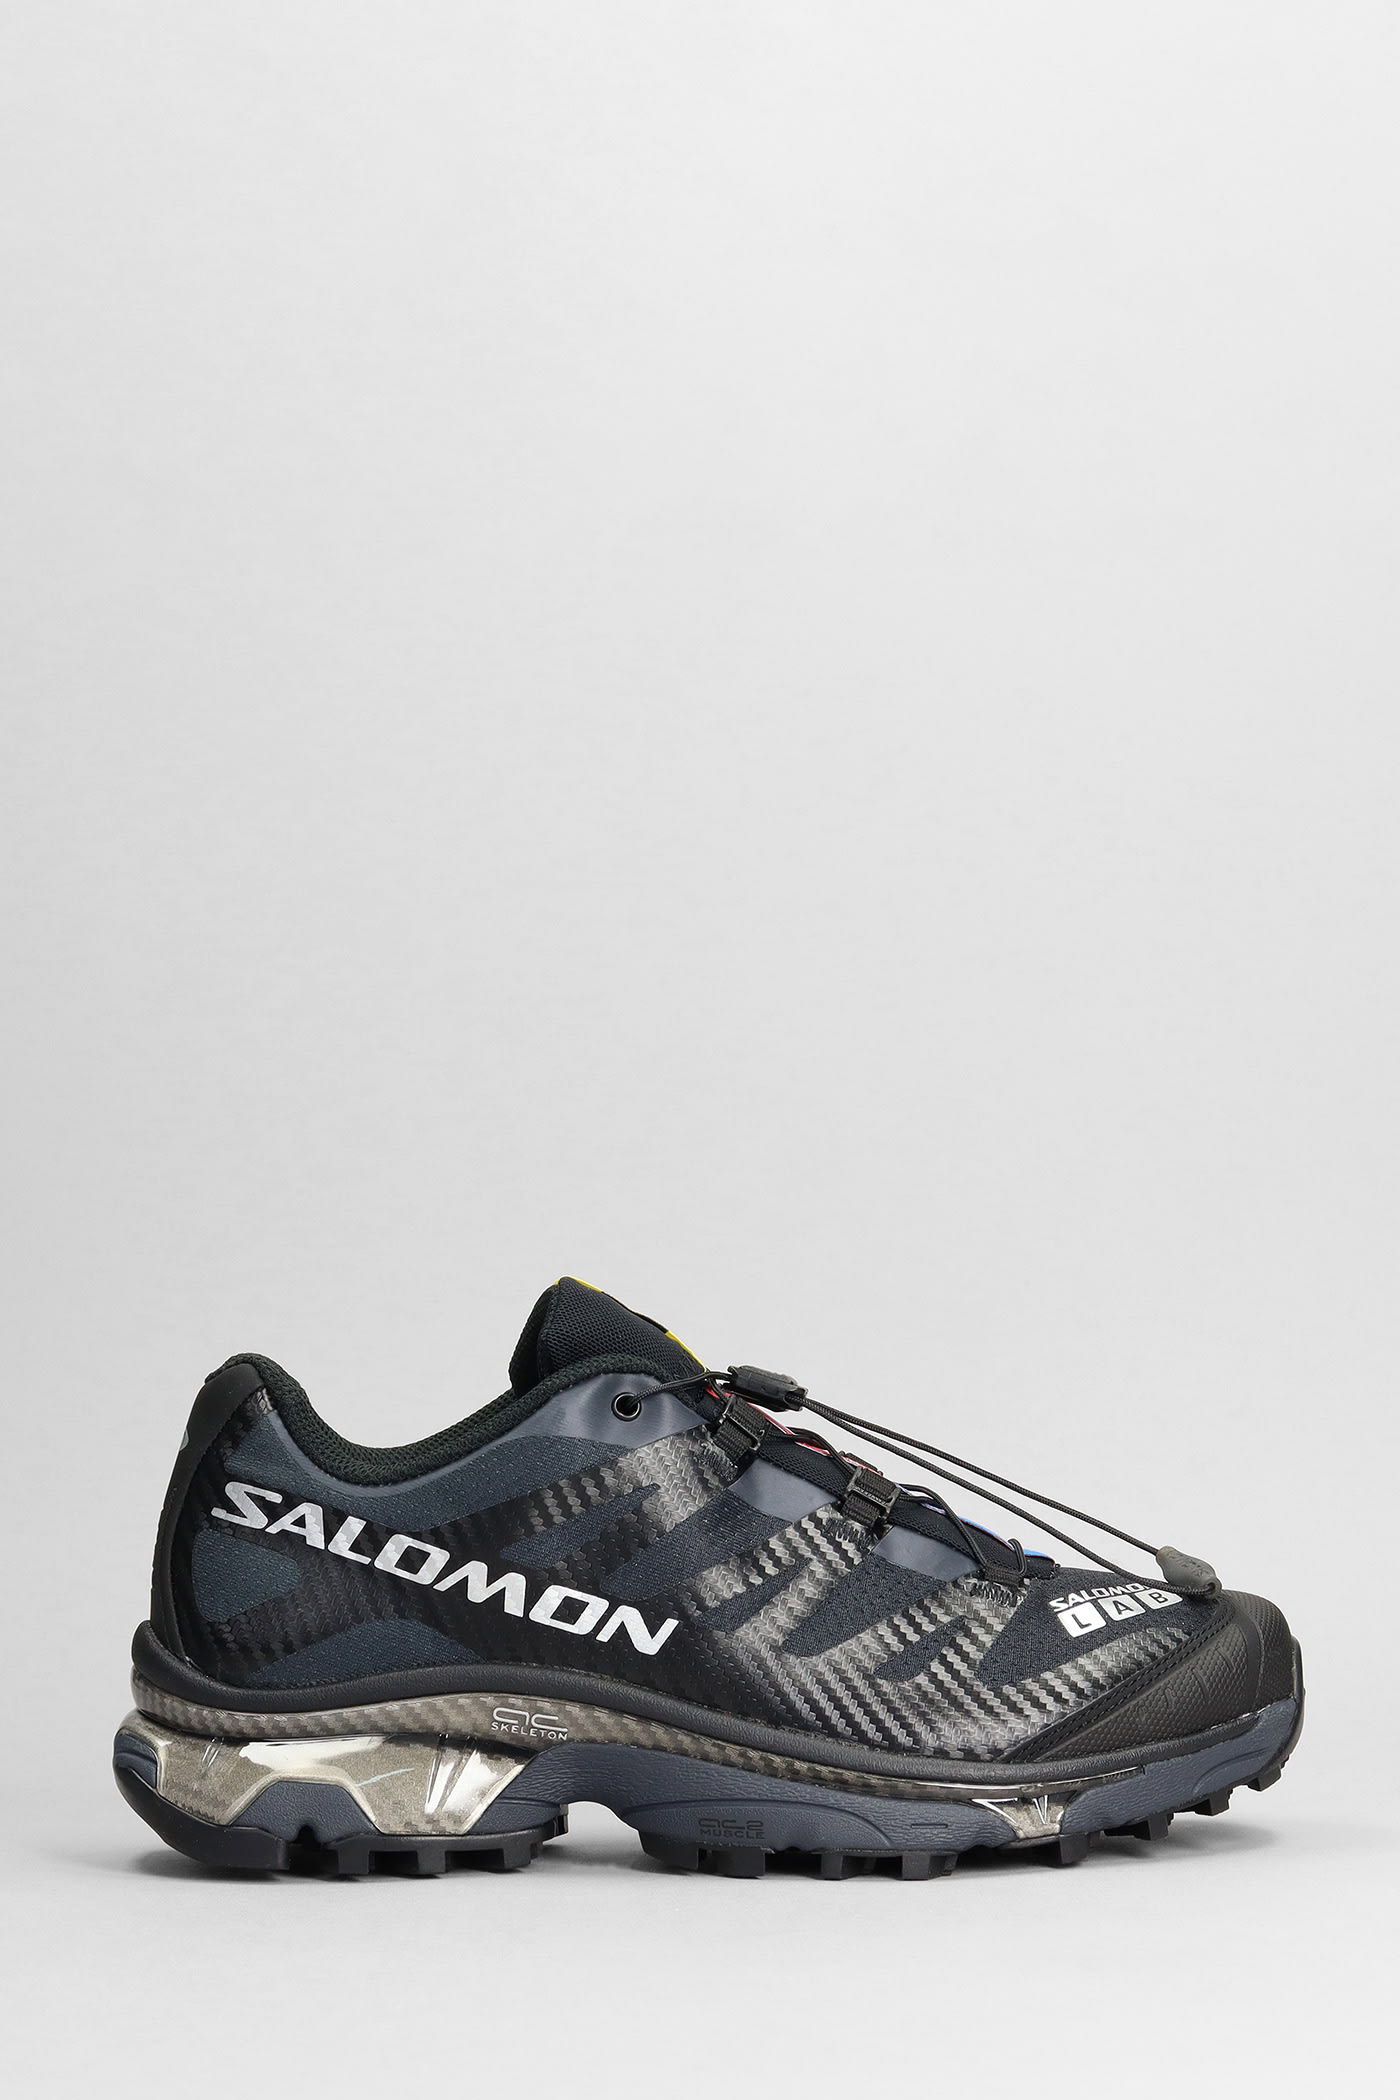 Salomon Xt-4 Og Sneakers In Black Synthetic Fibers